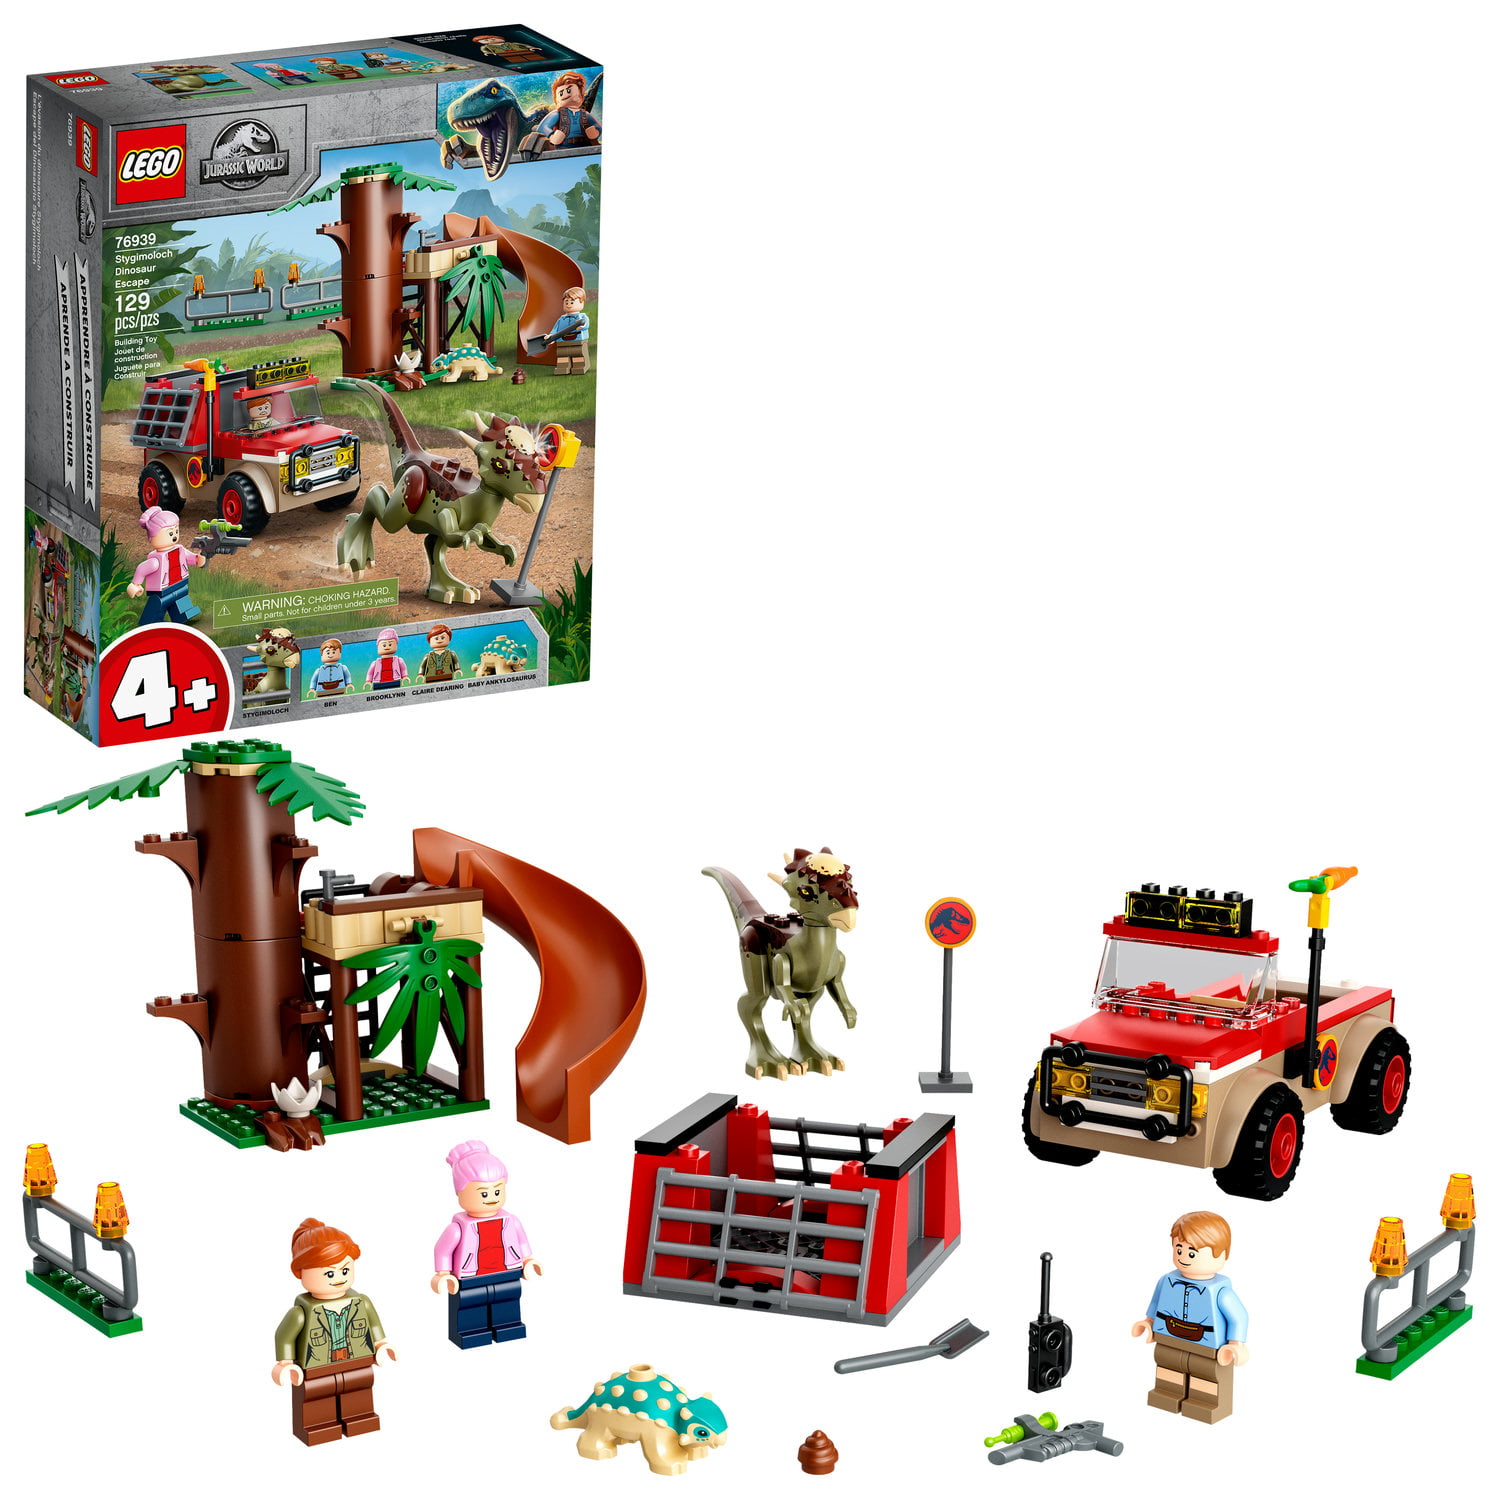 LEGO 4+ Sets: 129-Piece Jurassic World Stygimoloch Dinosaur Escape (76939) $23.85 or 157-Piece City Wildlife Rescue Off-Roader (60301) $29.54 + Free S&H w/ Walmart+ or $35+